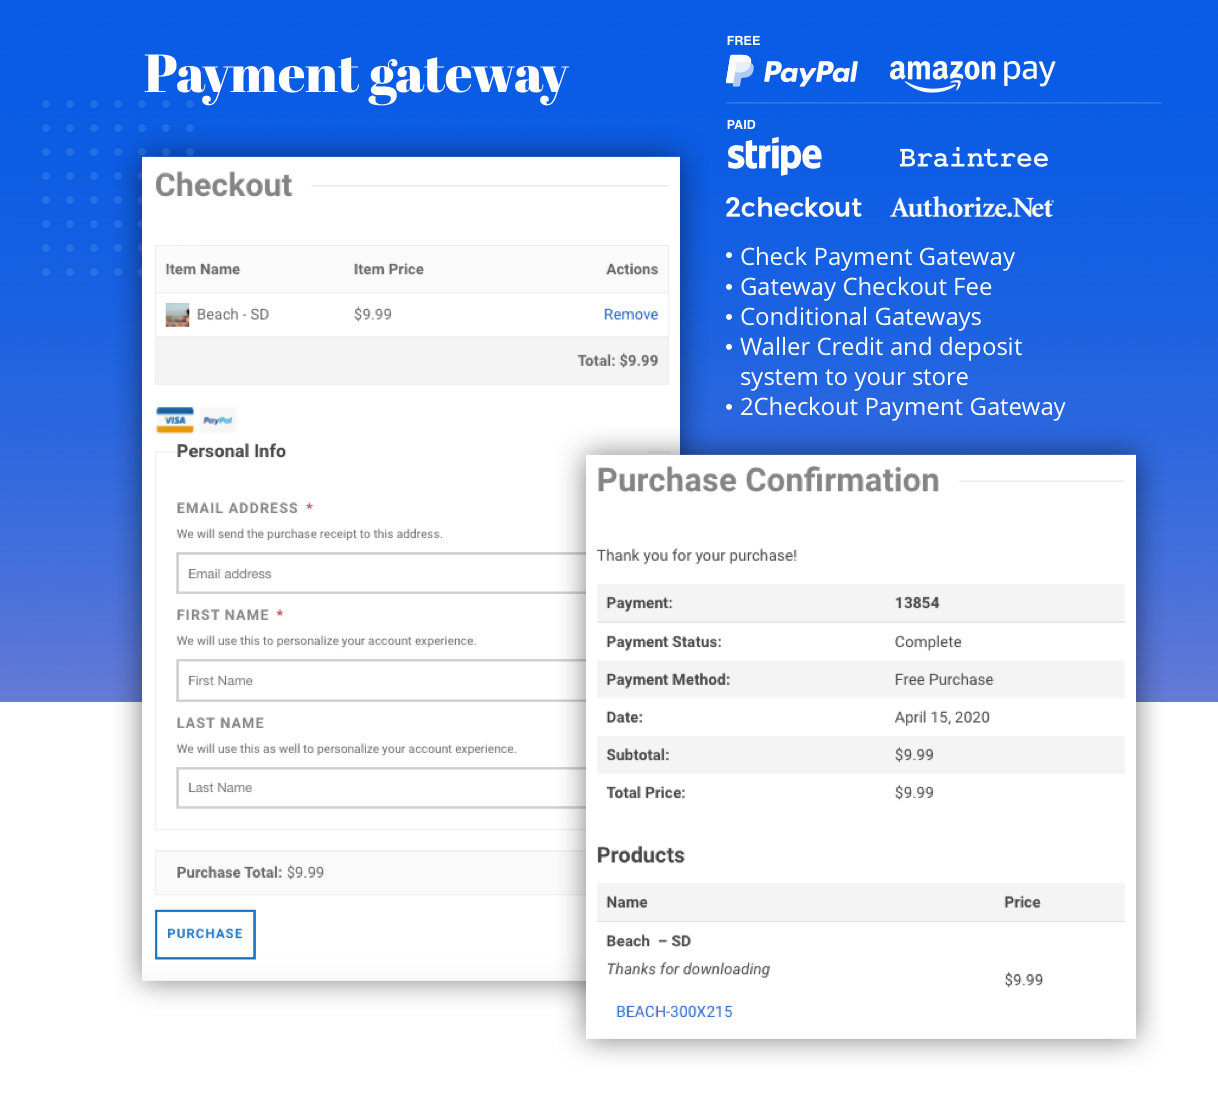 Payment gateway